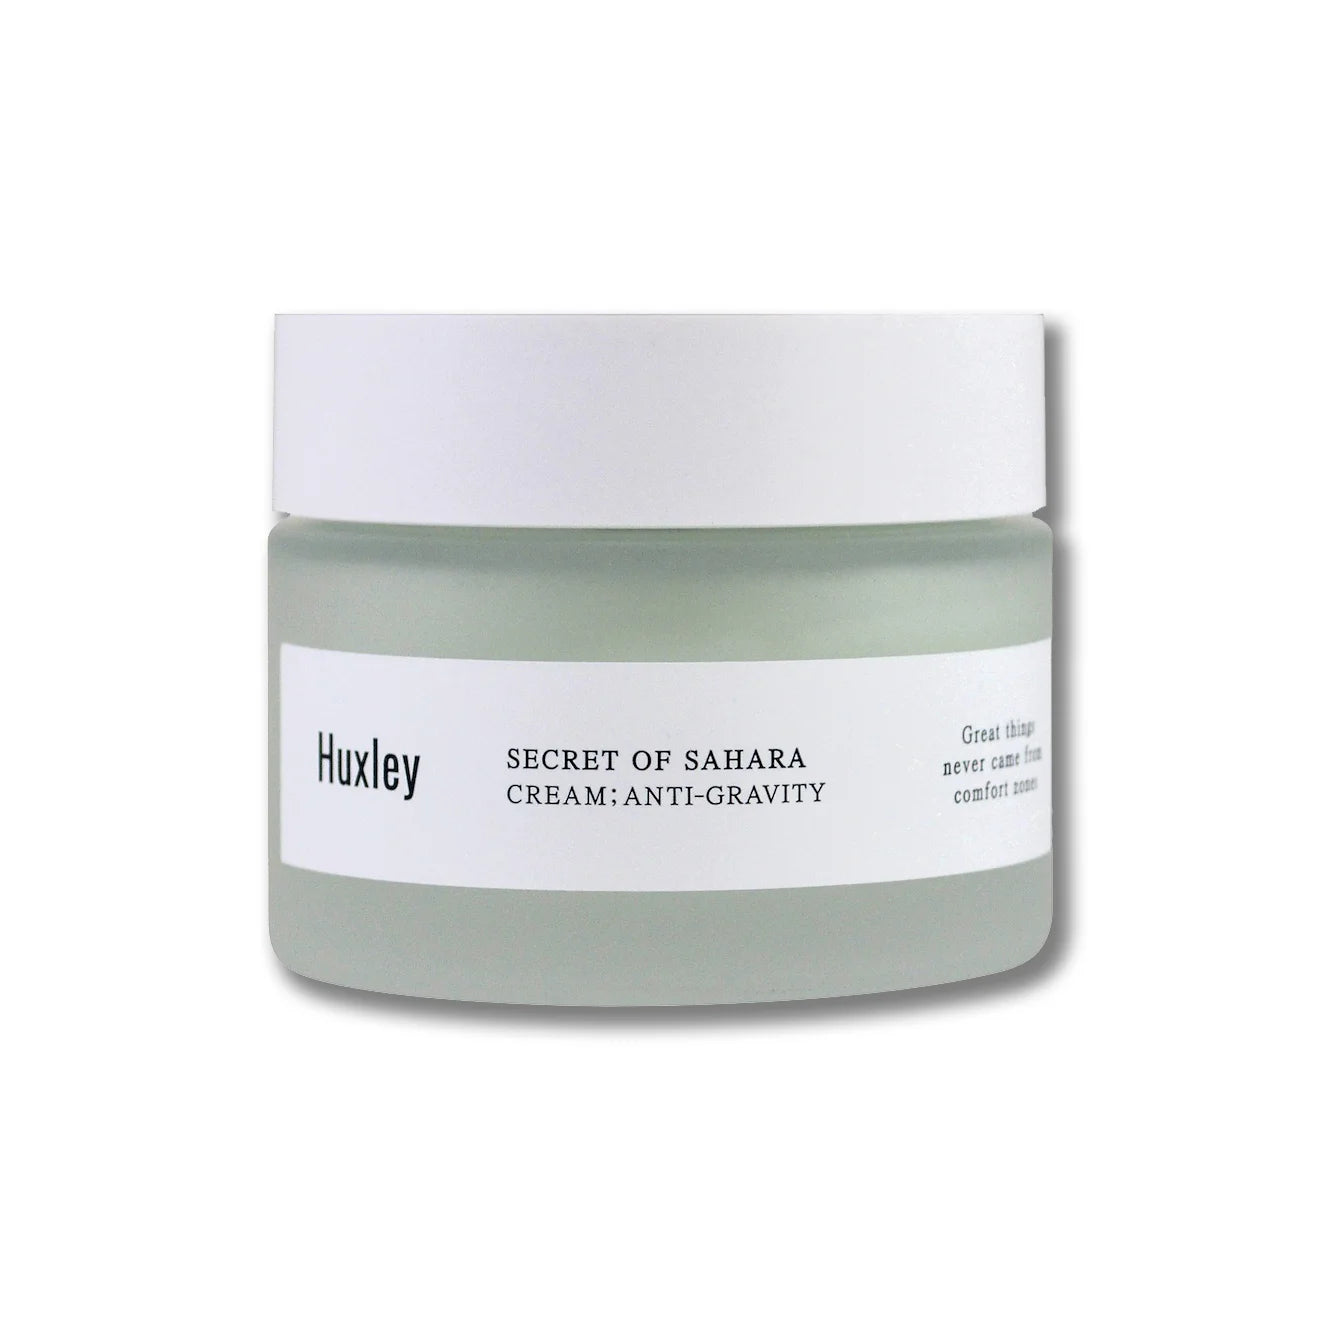 Huxley Anti-Gravity Cream face moisturizer mature skin wrinkles dark spots fine lines antioxidants K Beauty World